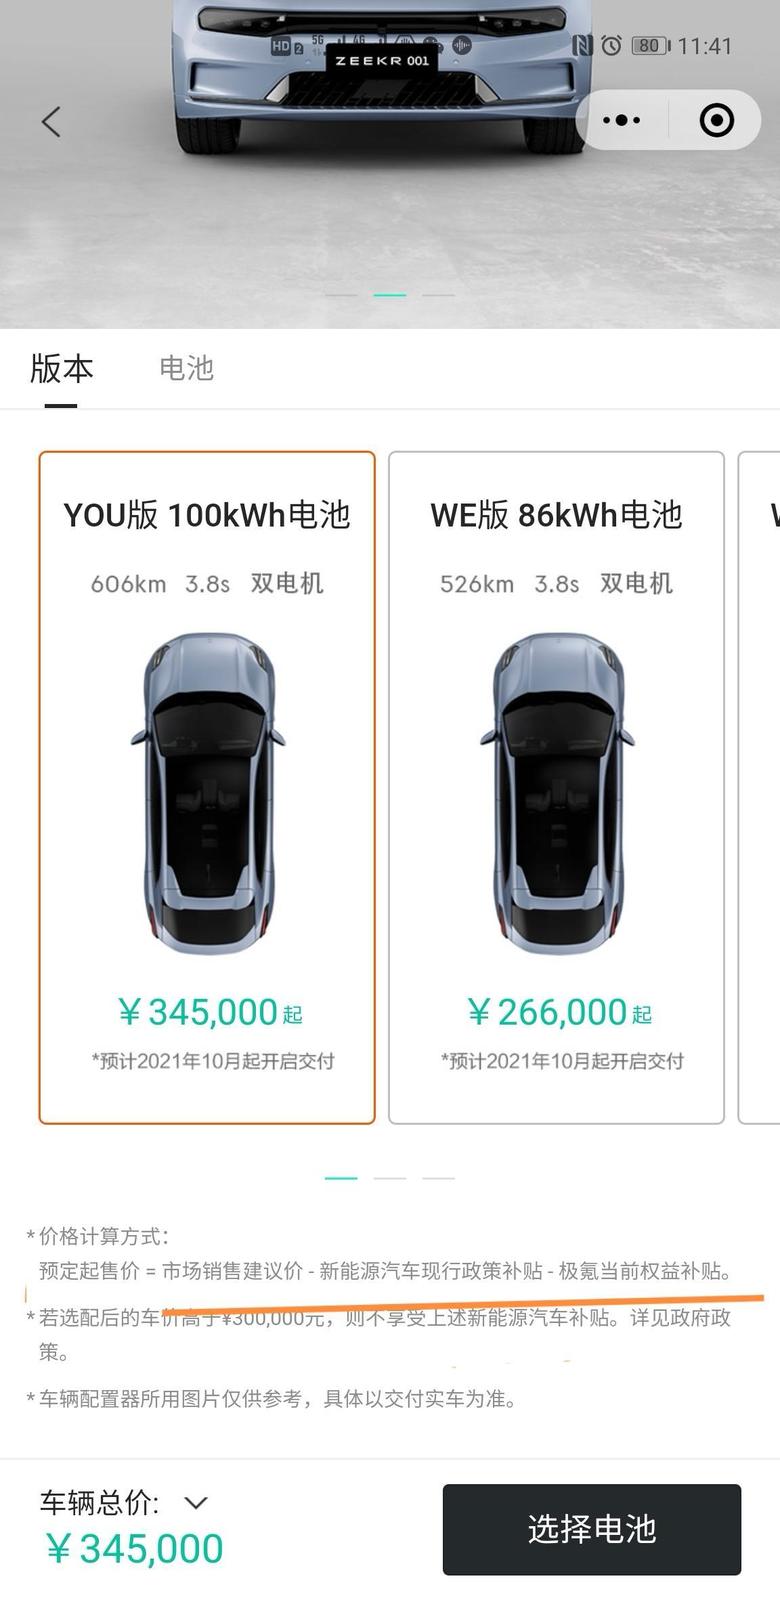 zeekr 001 关于该车的补贴问题，比如预订起售价26.6万的车型，实际车辆原价应该是26.6+1.8+1.5=29.9，也就是国家补贴的1.8万不能再领取了，是这么理解的吗？请知道的解答一下，如下图标注位置。